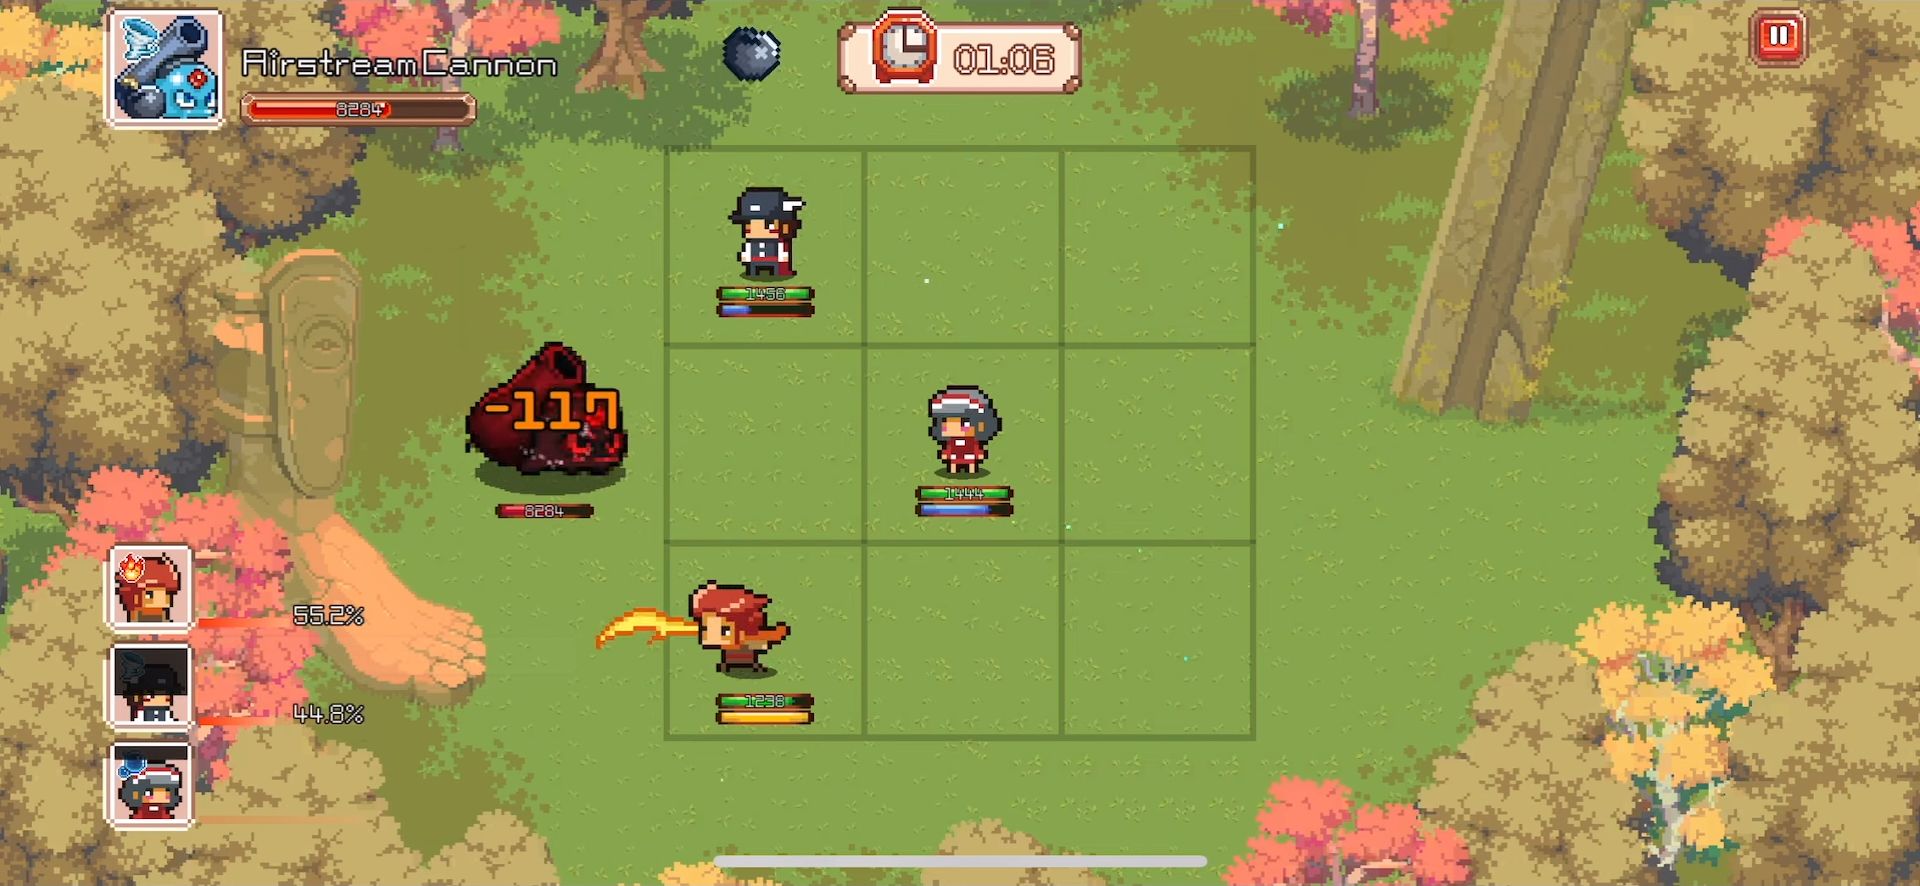 Queen's Heroes - Android game screenshots.